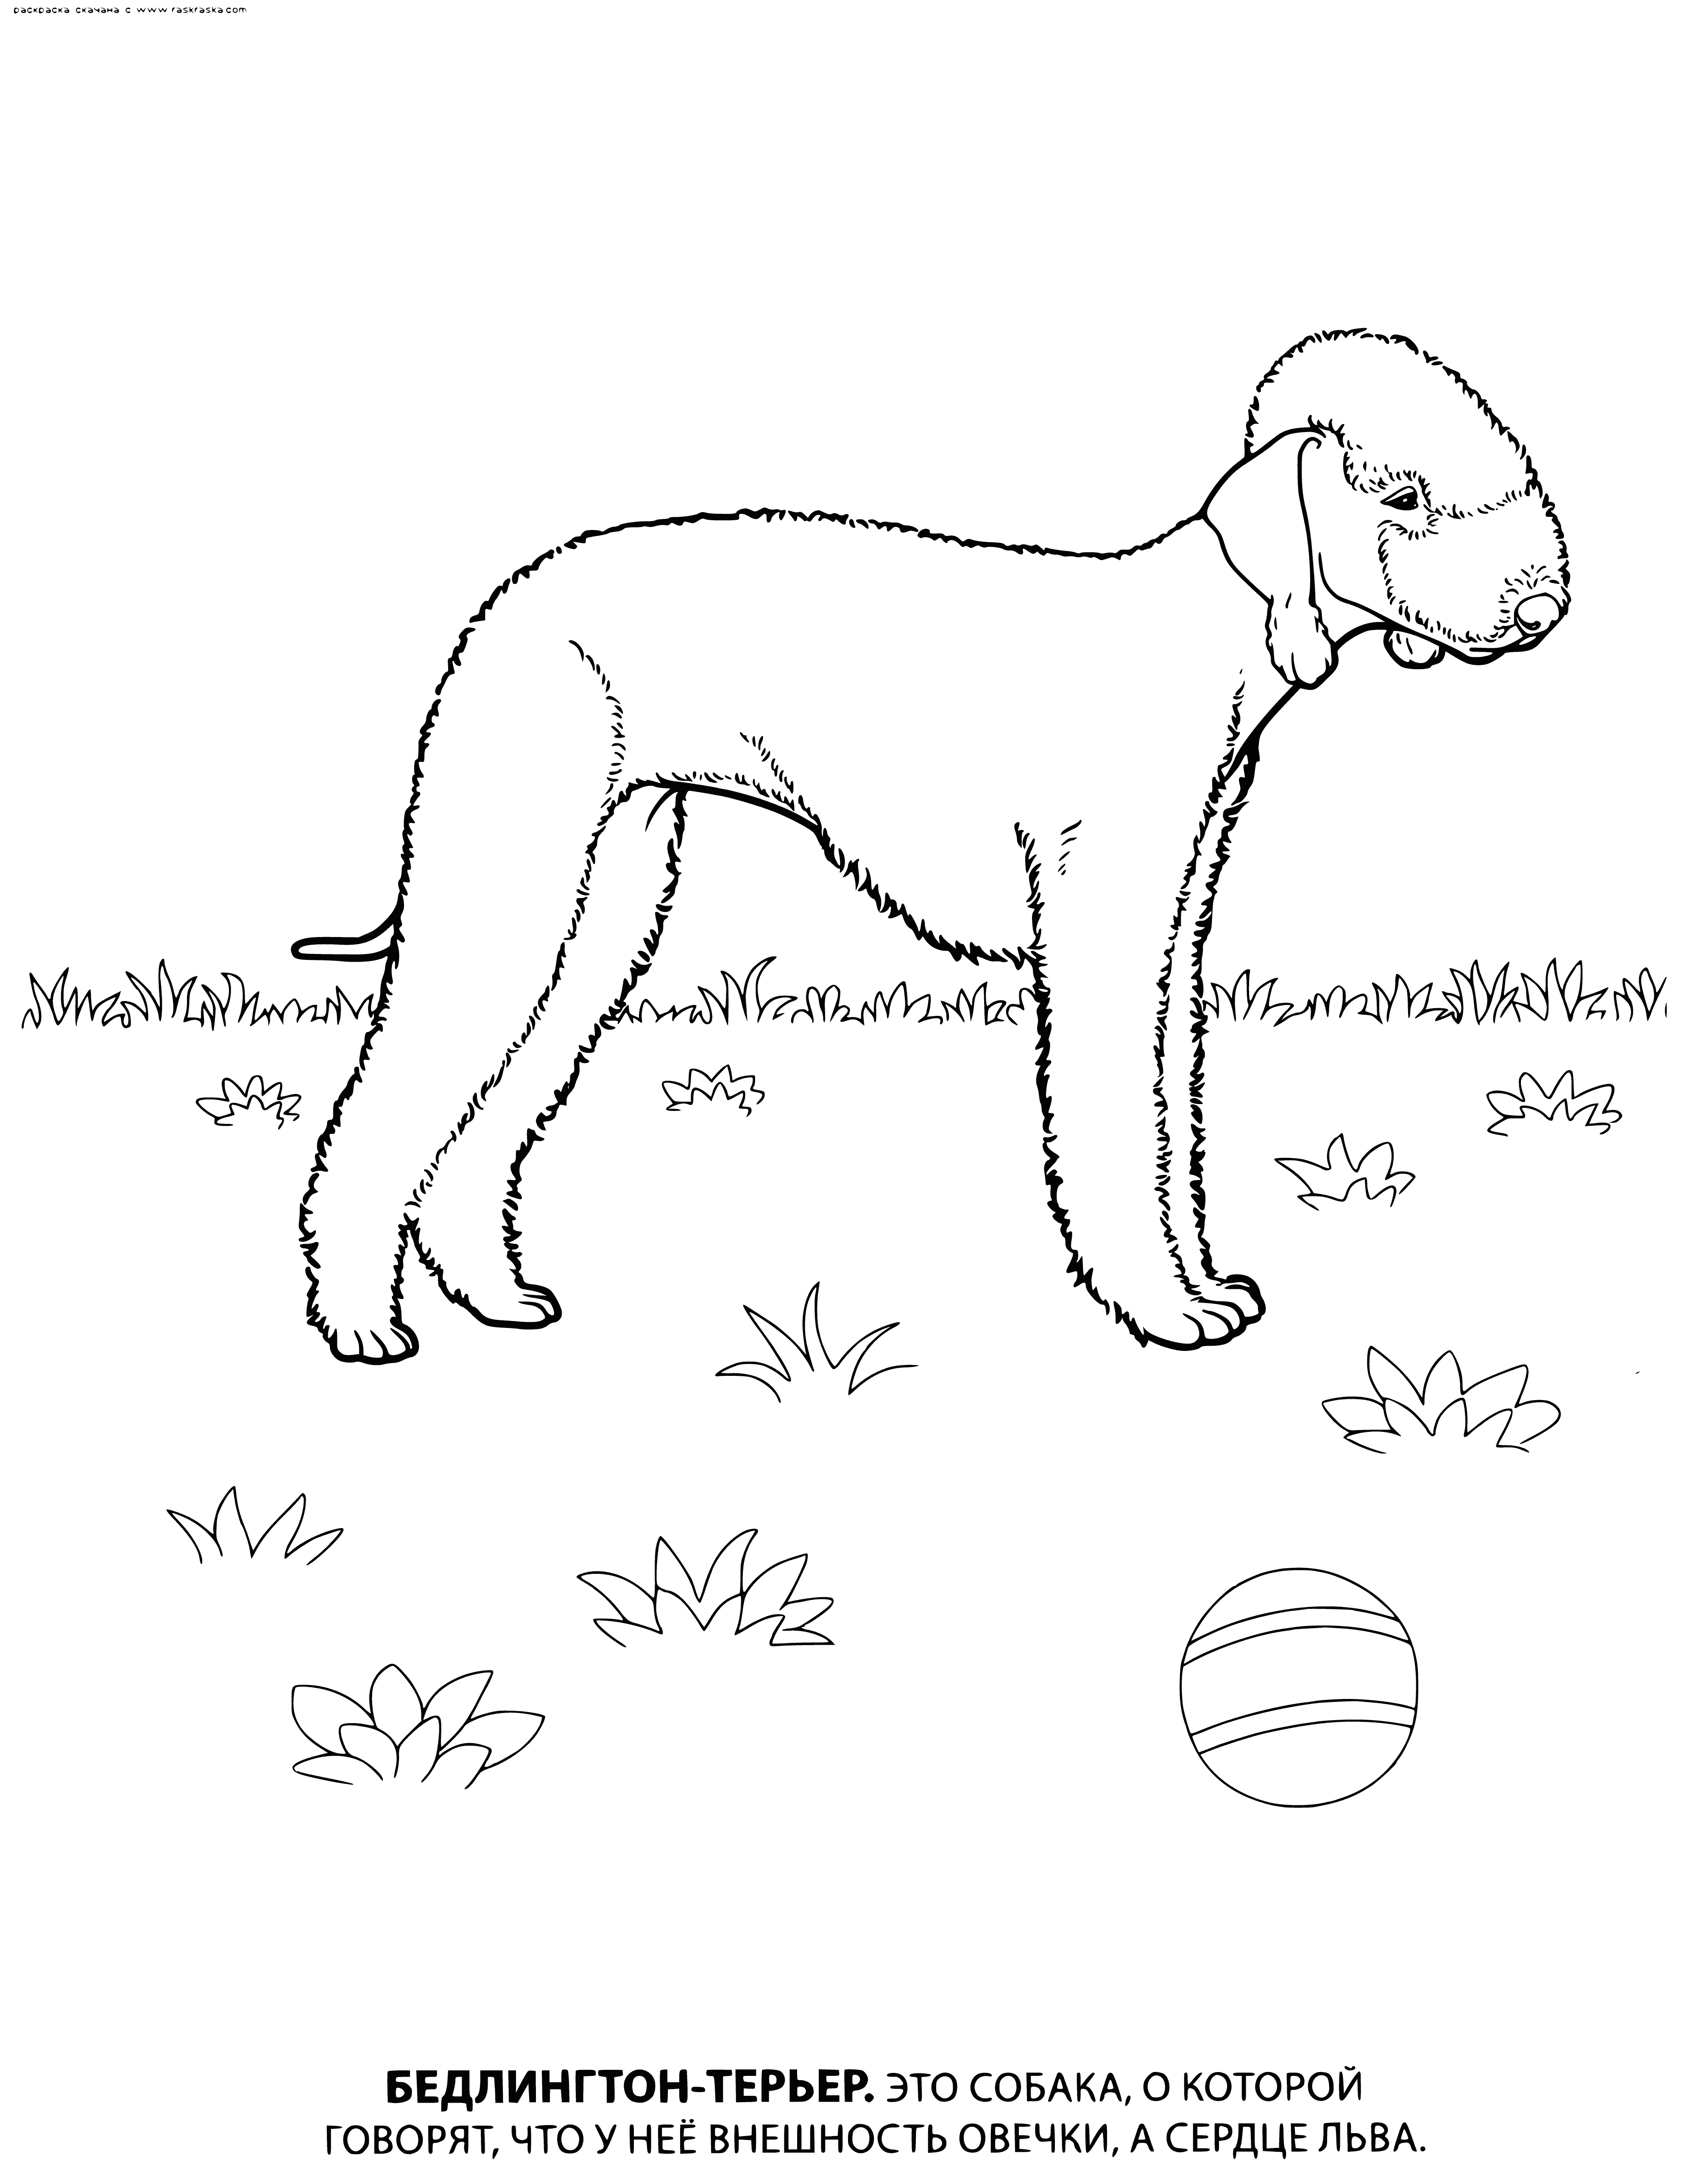 Bedlington Terrier coloring page